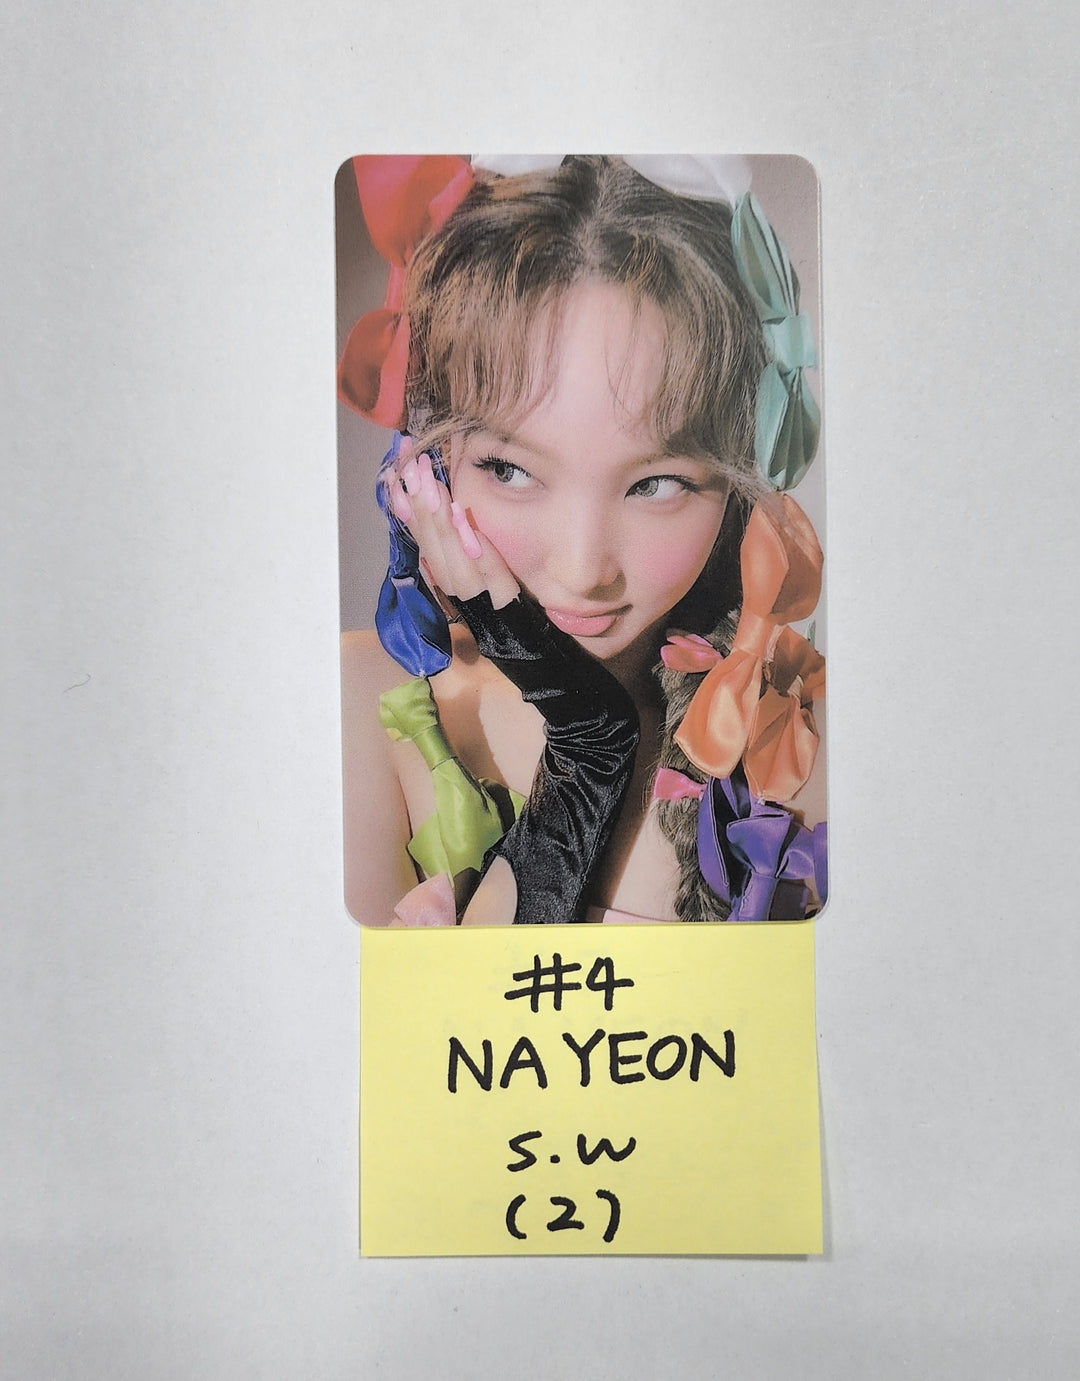 Nayeon "IM NAYEON" - Soundwave Lucky Draw Event Photocard, Postcard